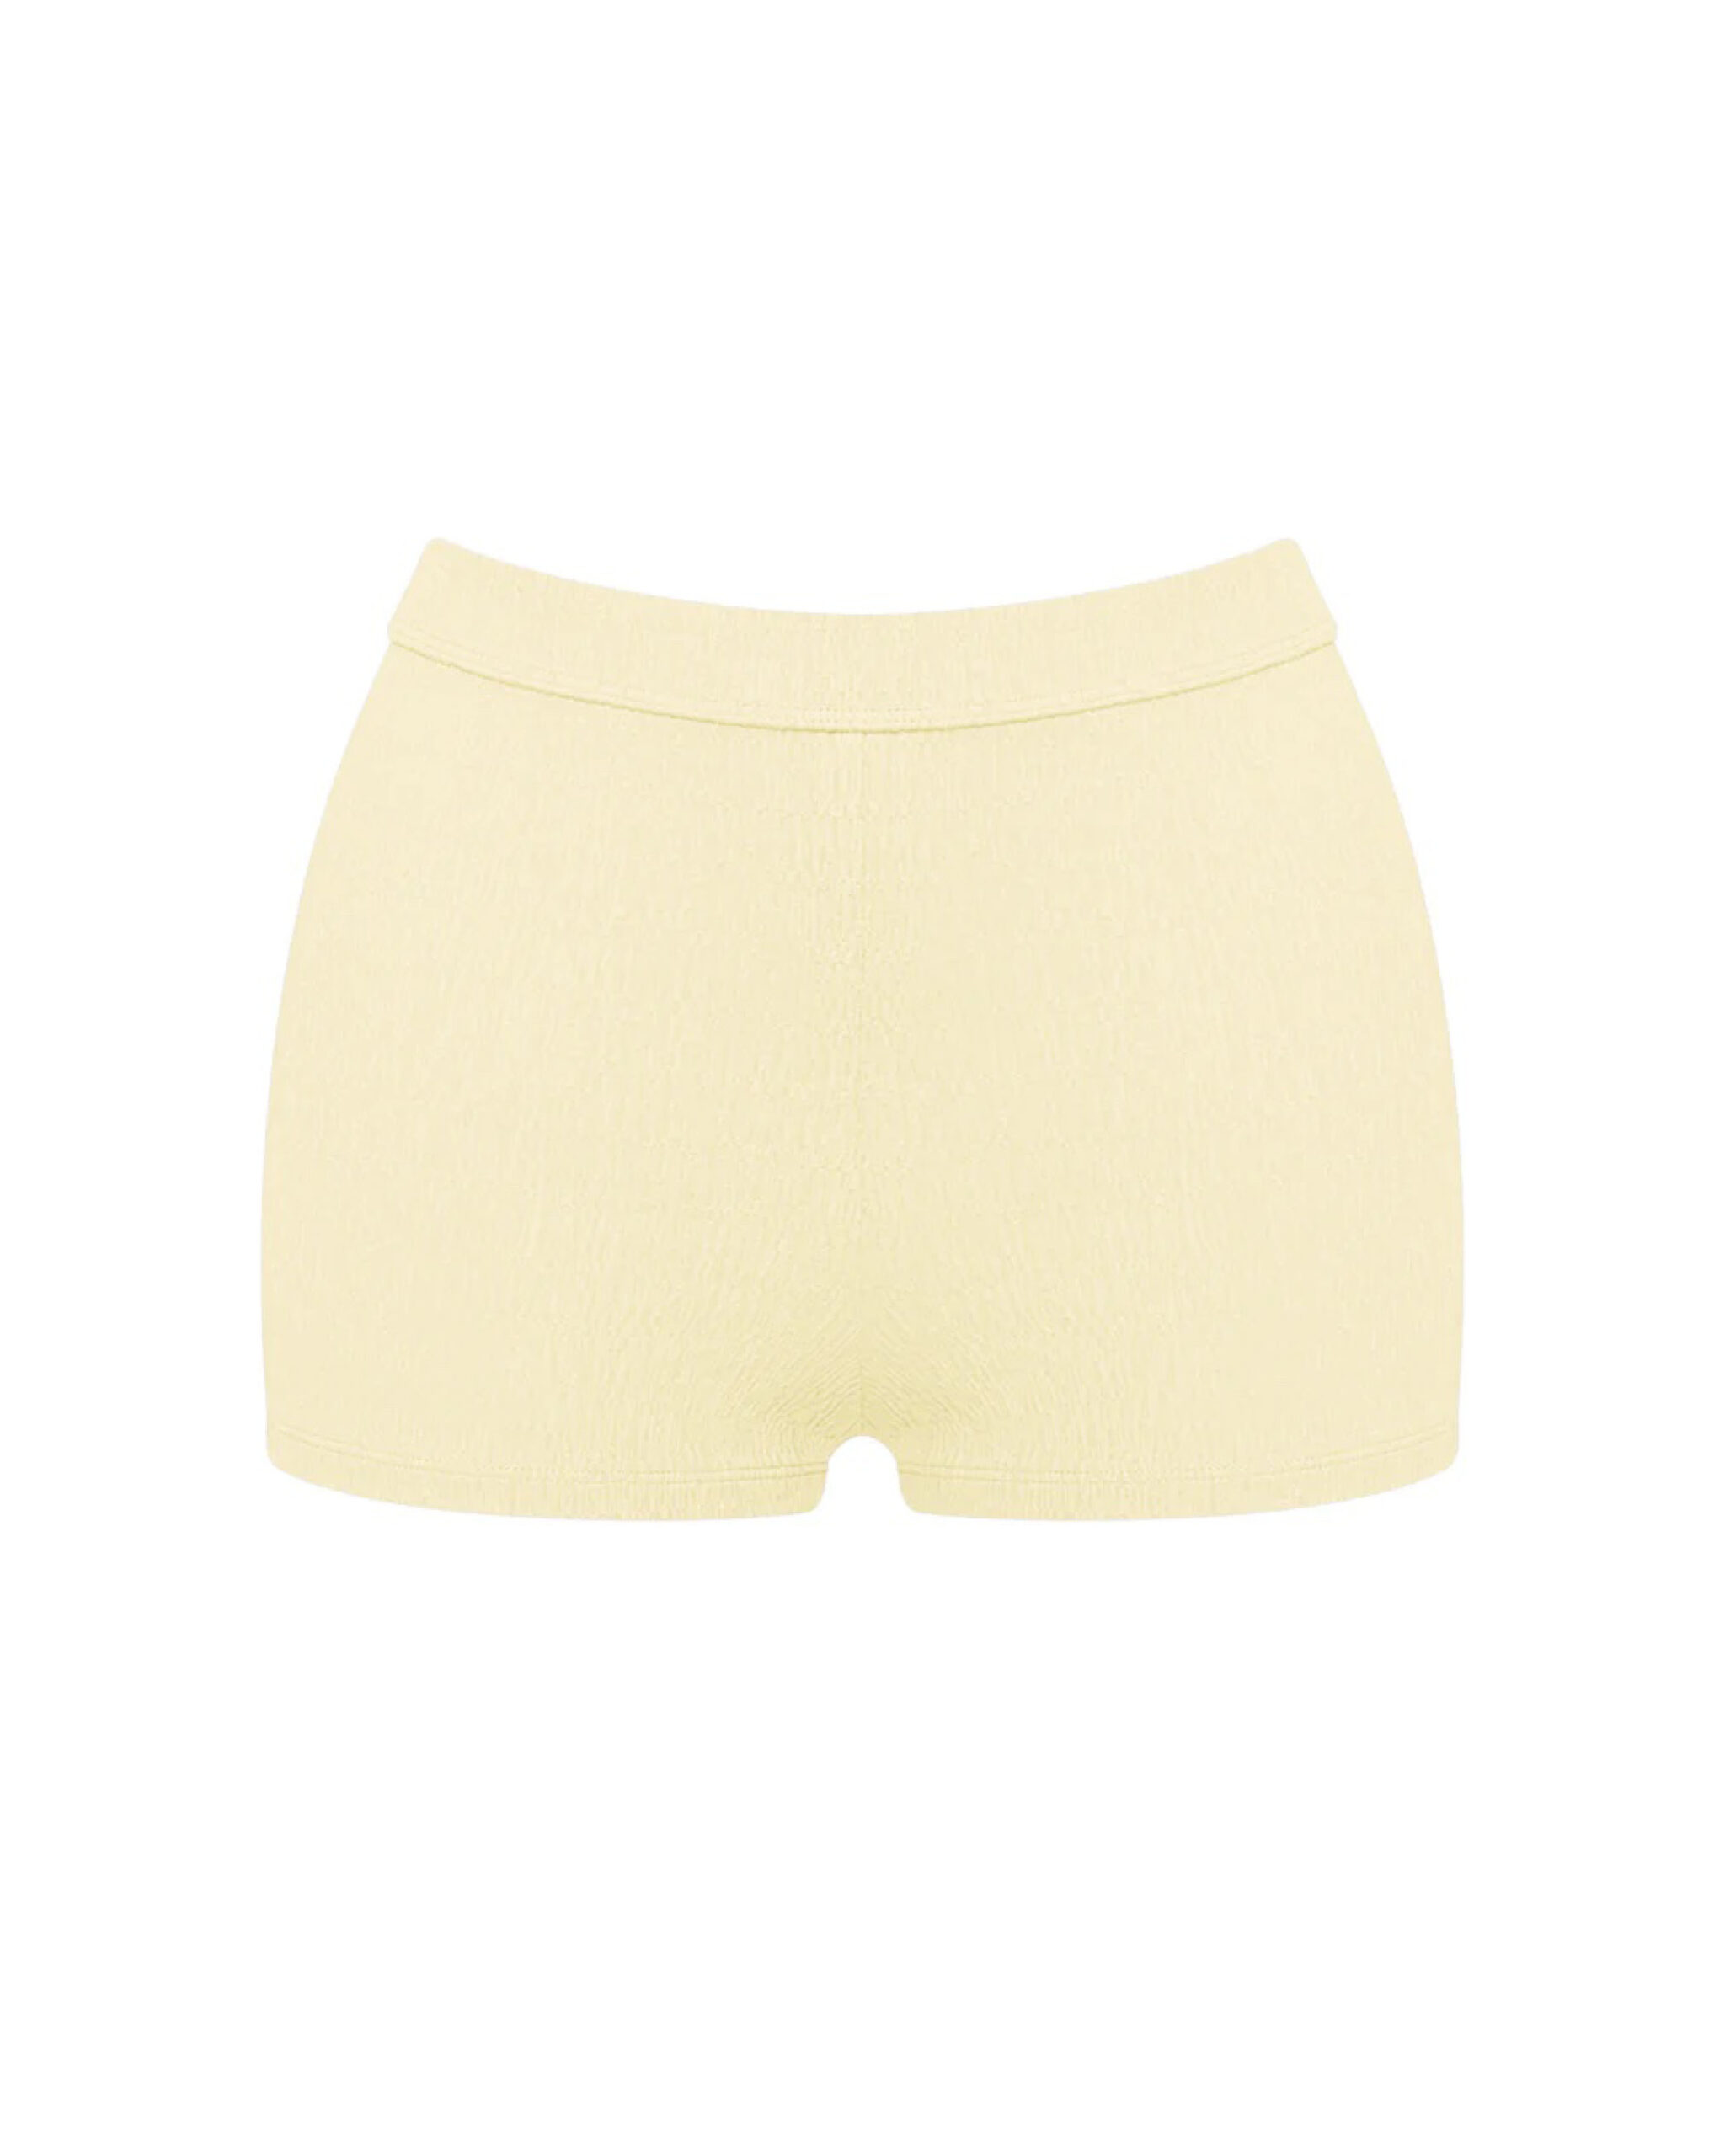 TJ-Swim-Jade-Shorts-Butter-scaled